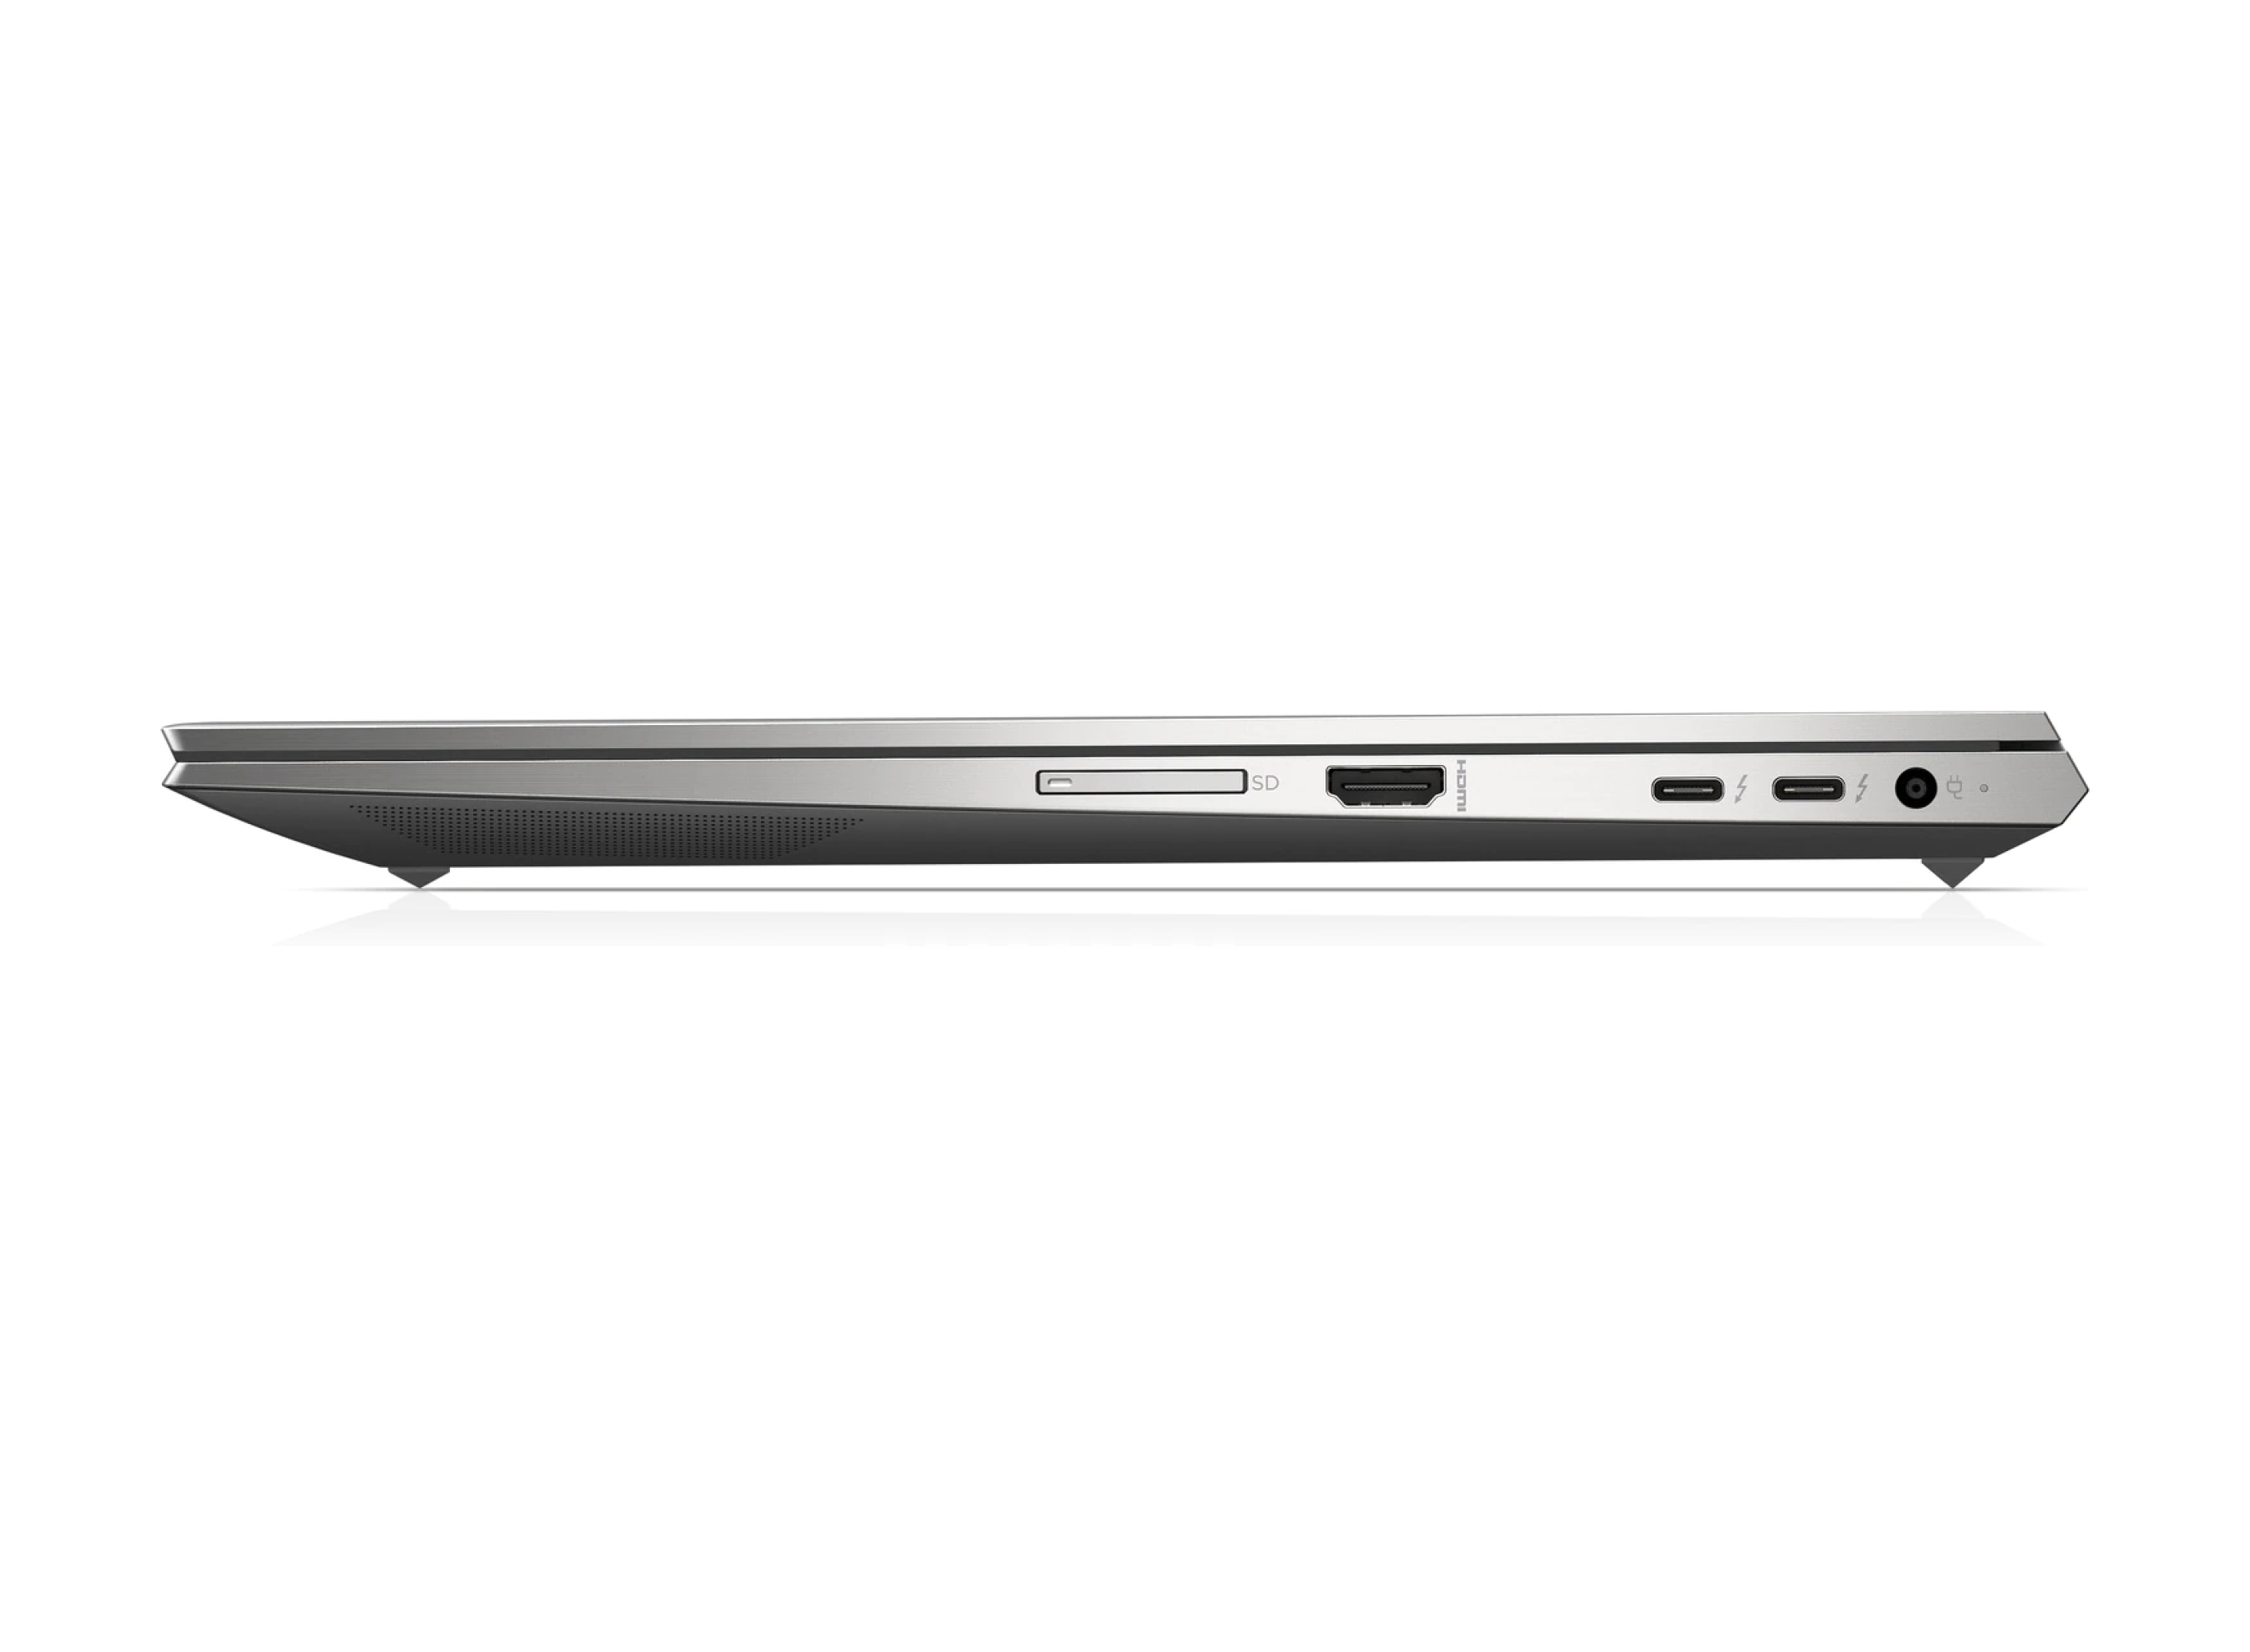  قیمت و خرید لپ تاپ HP ZBOOK STUDIO 15 G7 نسل دهم | لاکچری لپ تاپ 